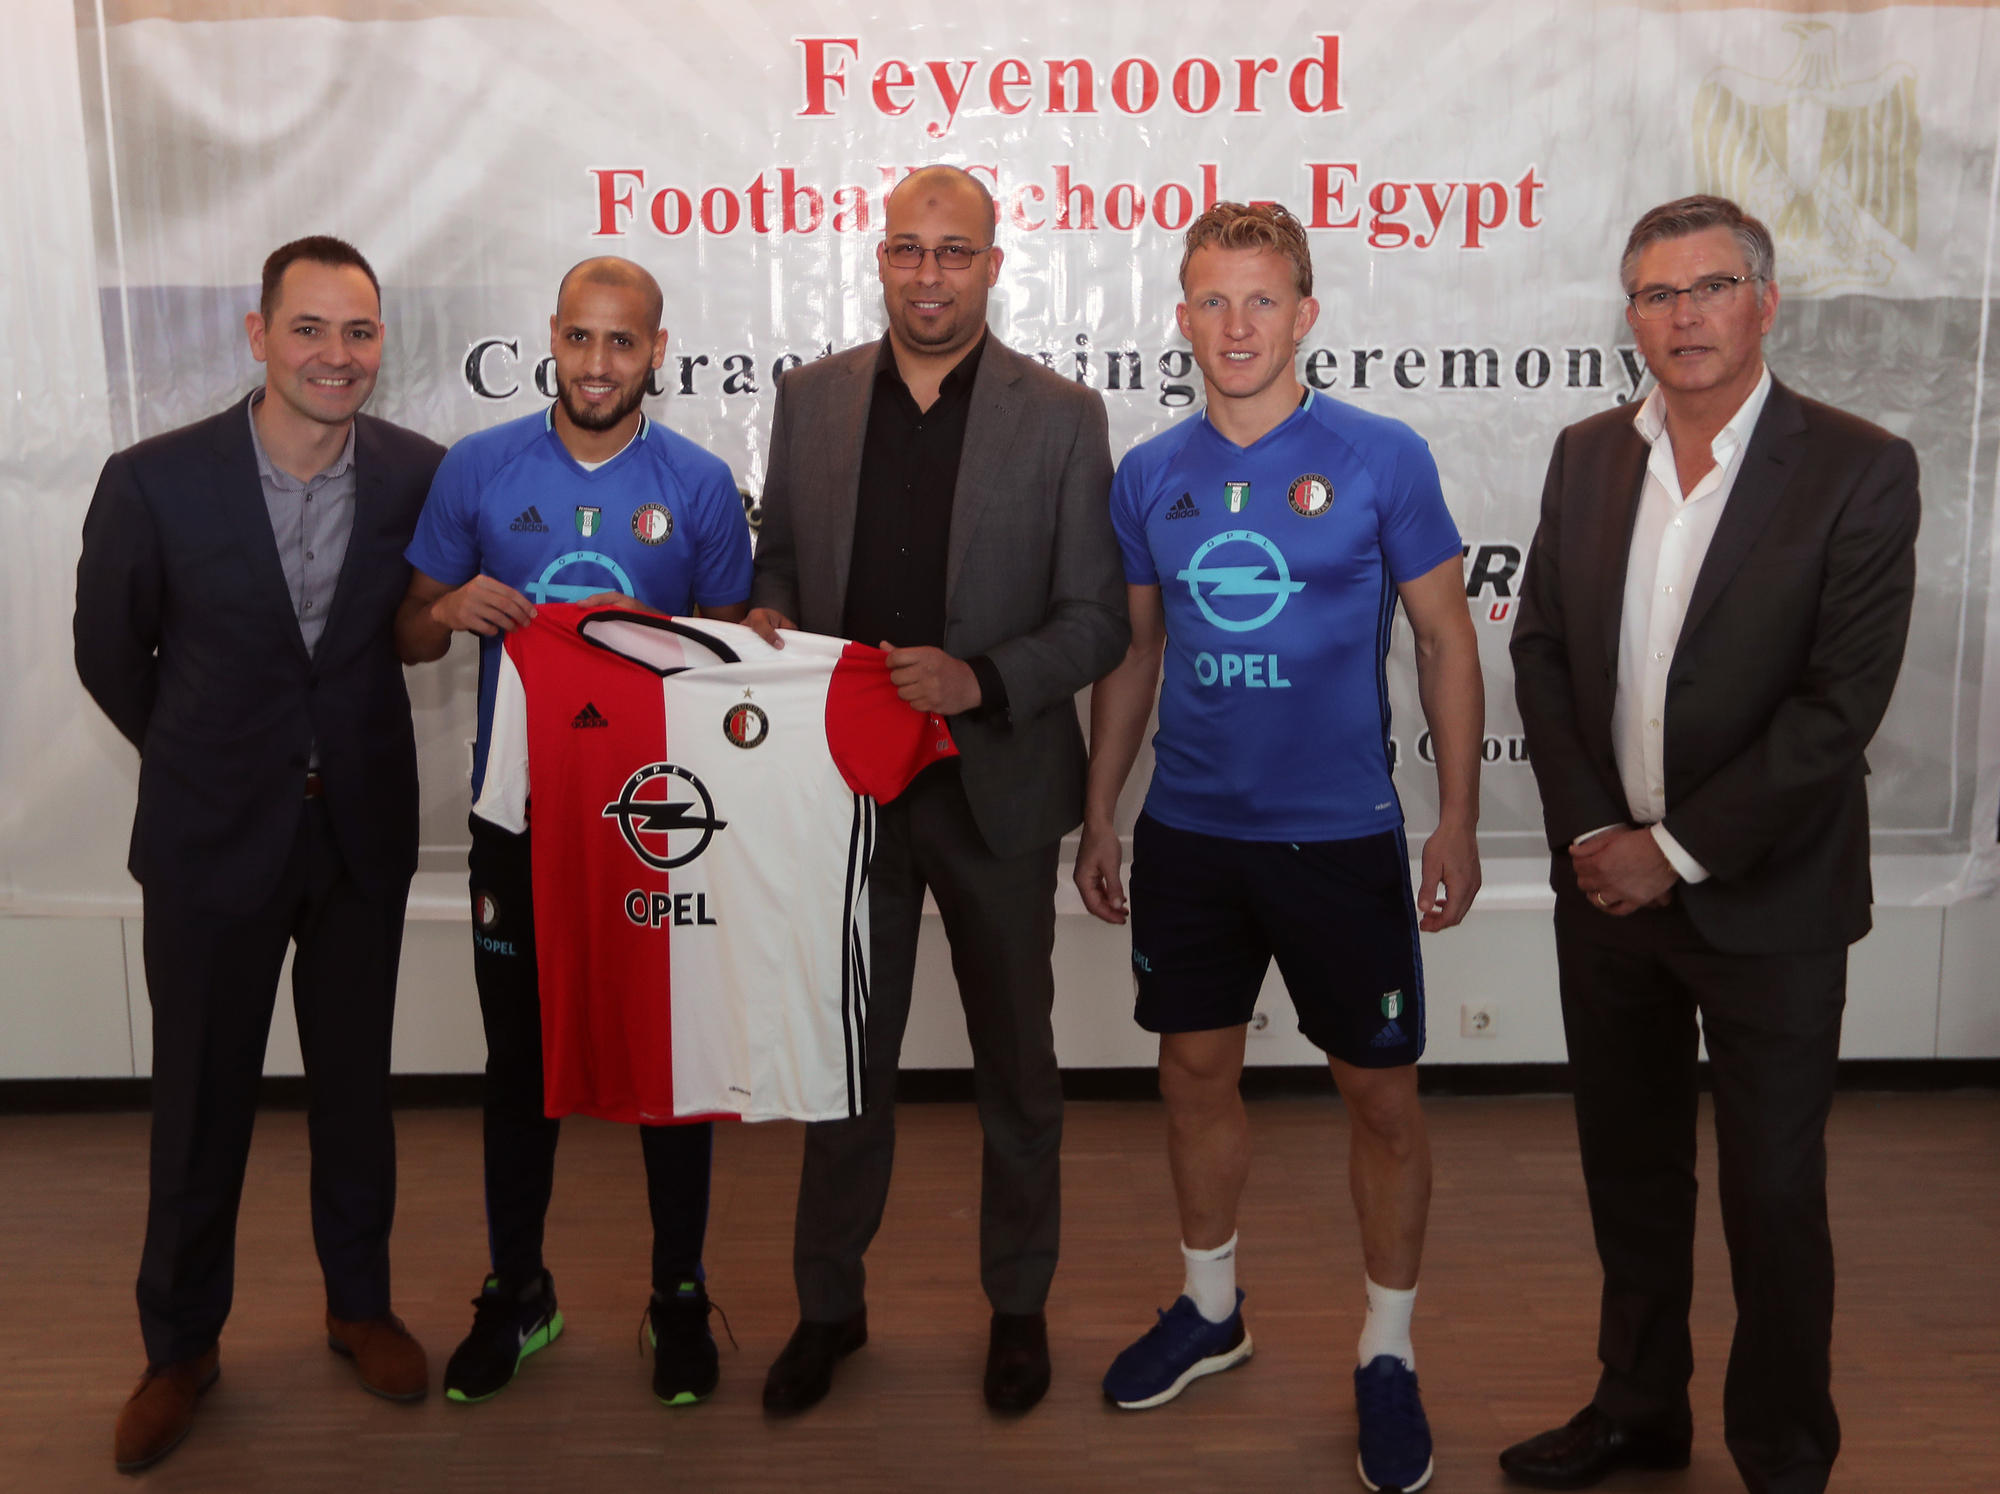 Partnership agreement for Feyenoord football academy in Egypt